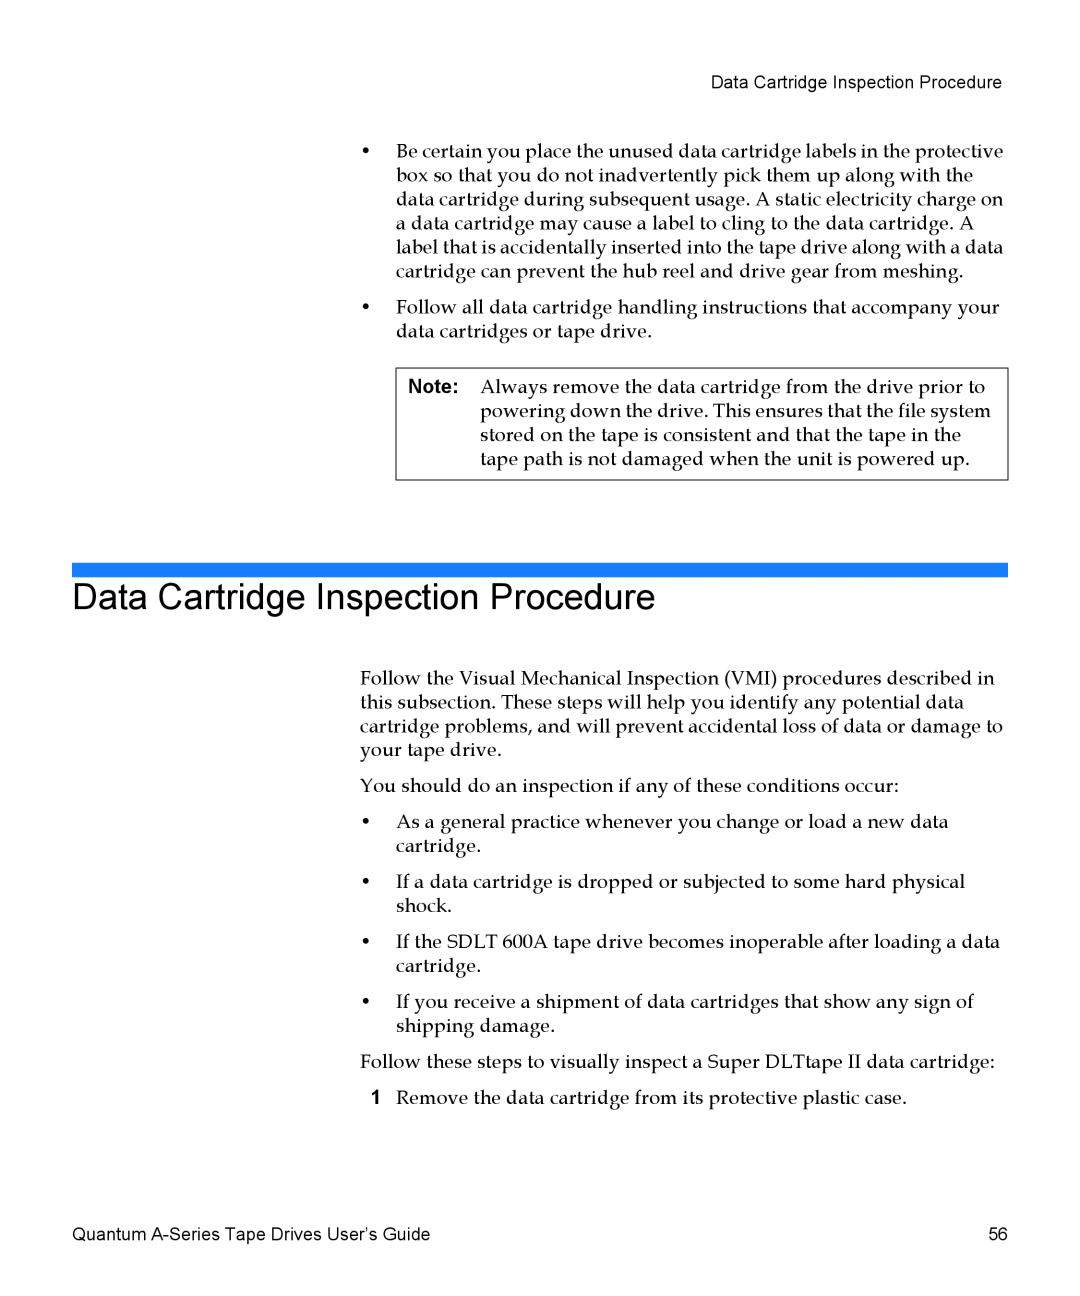 Quantum A-Series manual Data Cartridge Inspection Procedure 